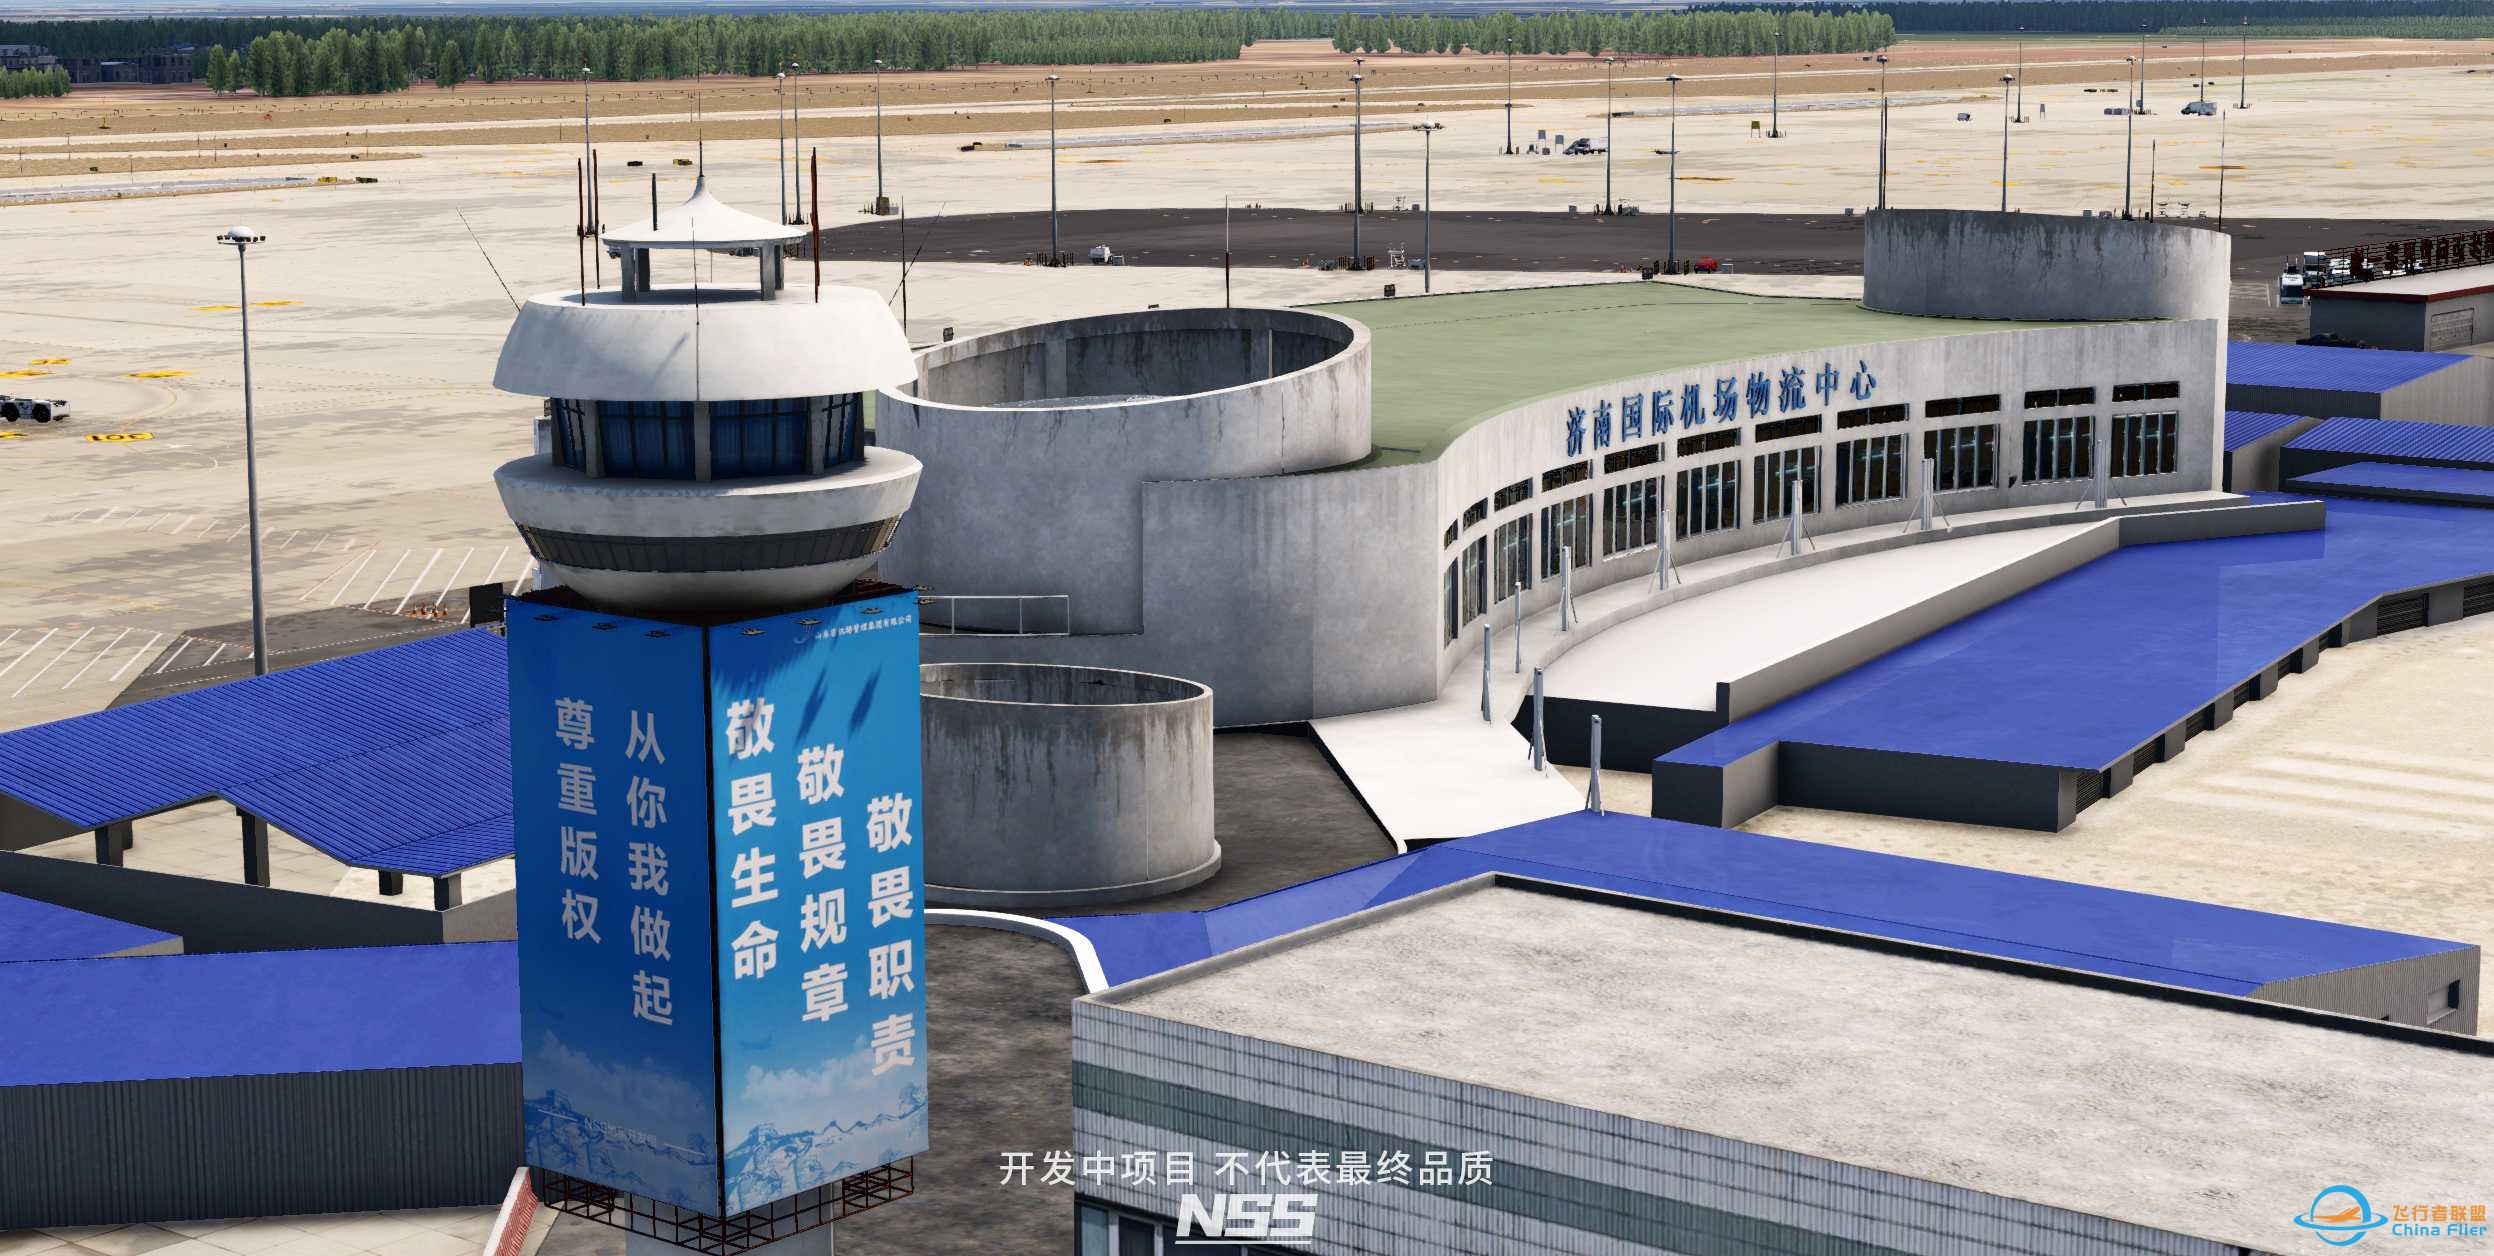 NSS地景开发组 ZSJN 济南遥墙国际机场项目预览 兼公布-6986 